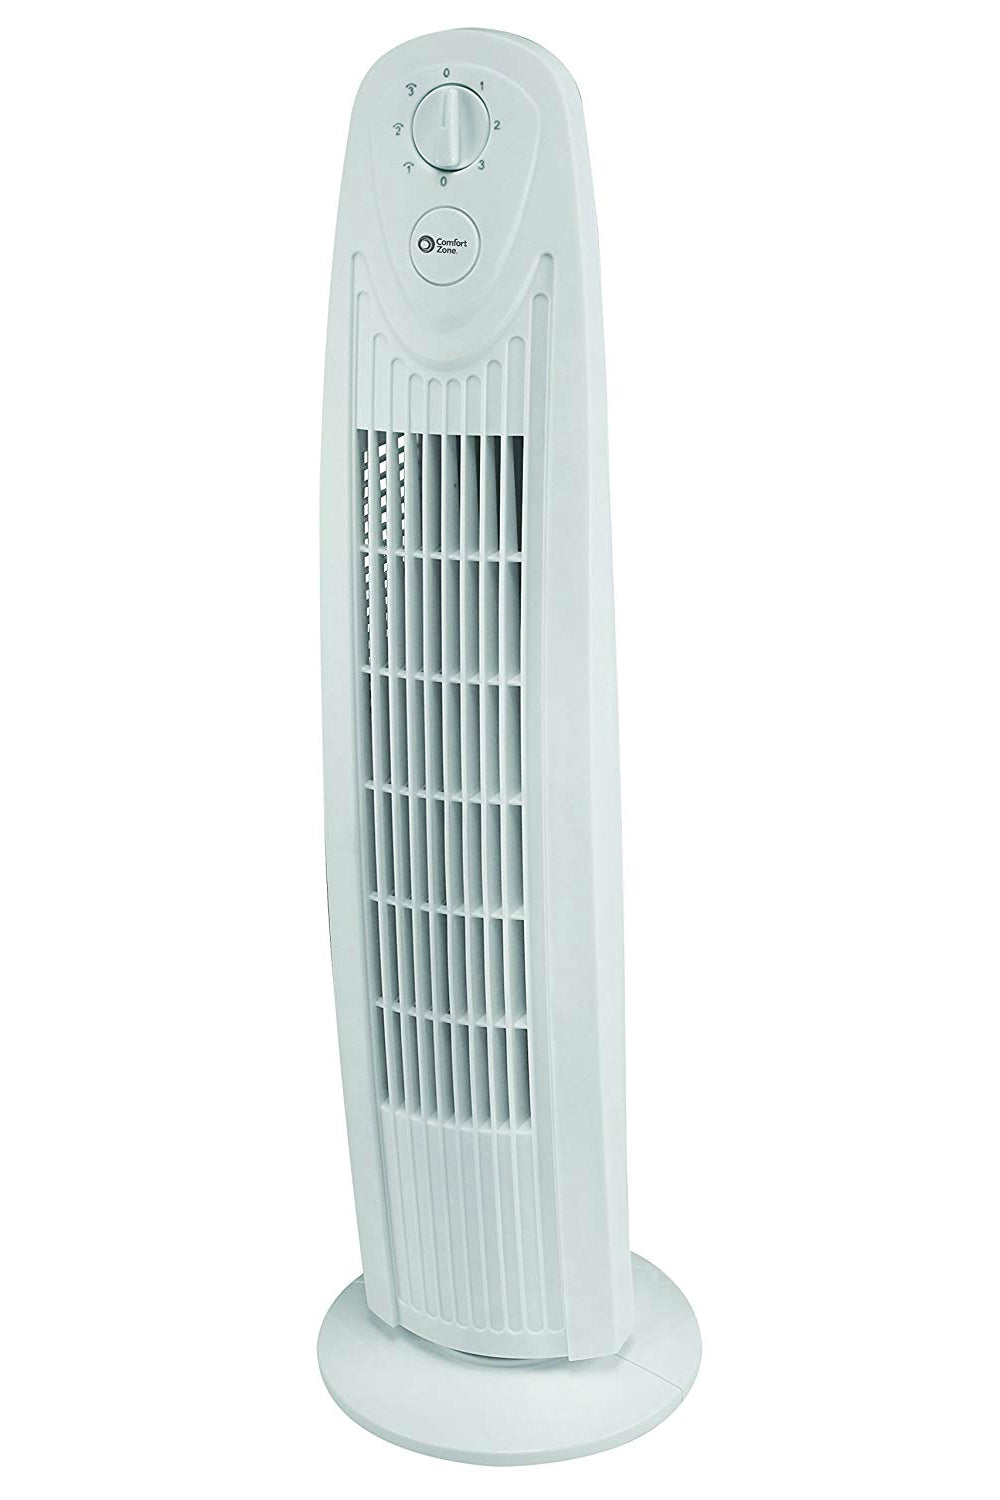 buy pedestal fans at cheap rate in bulk. wholesale & retail ventilation & fans repair kits store.